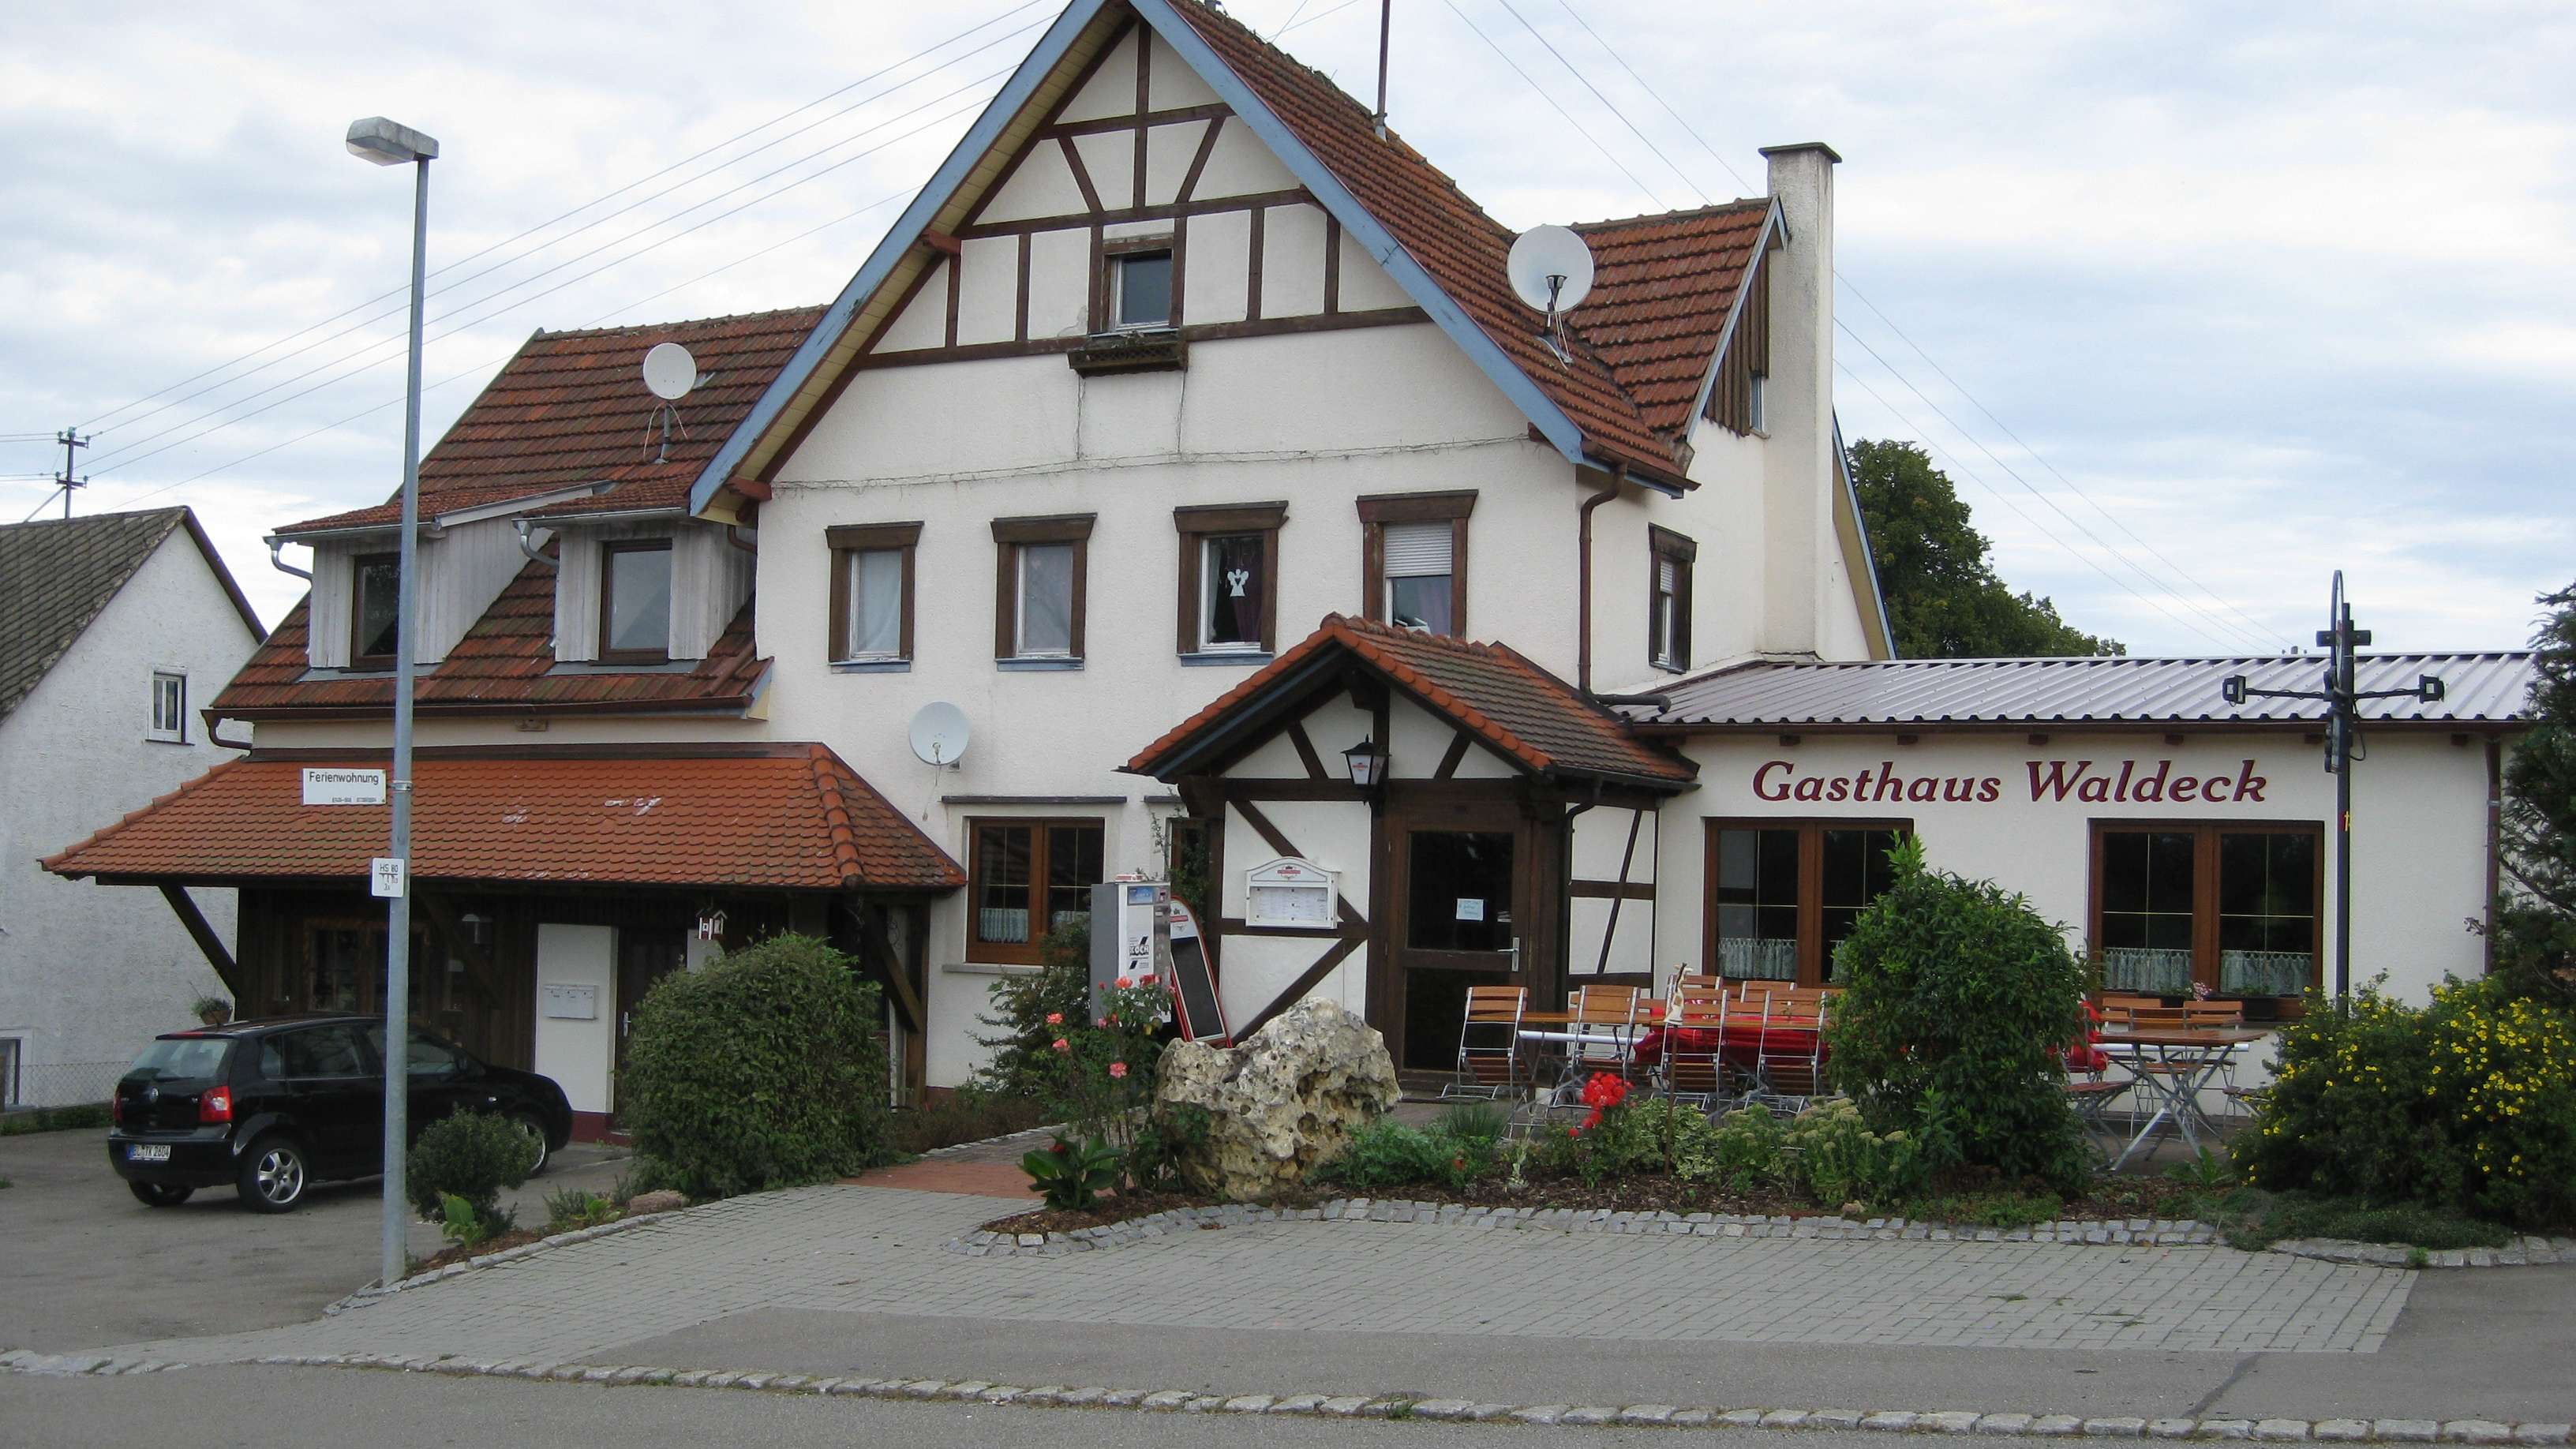  Landgasthaus Waldeck ("Tanneck") 